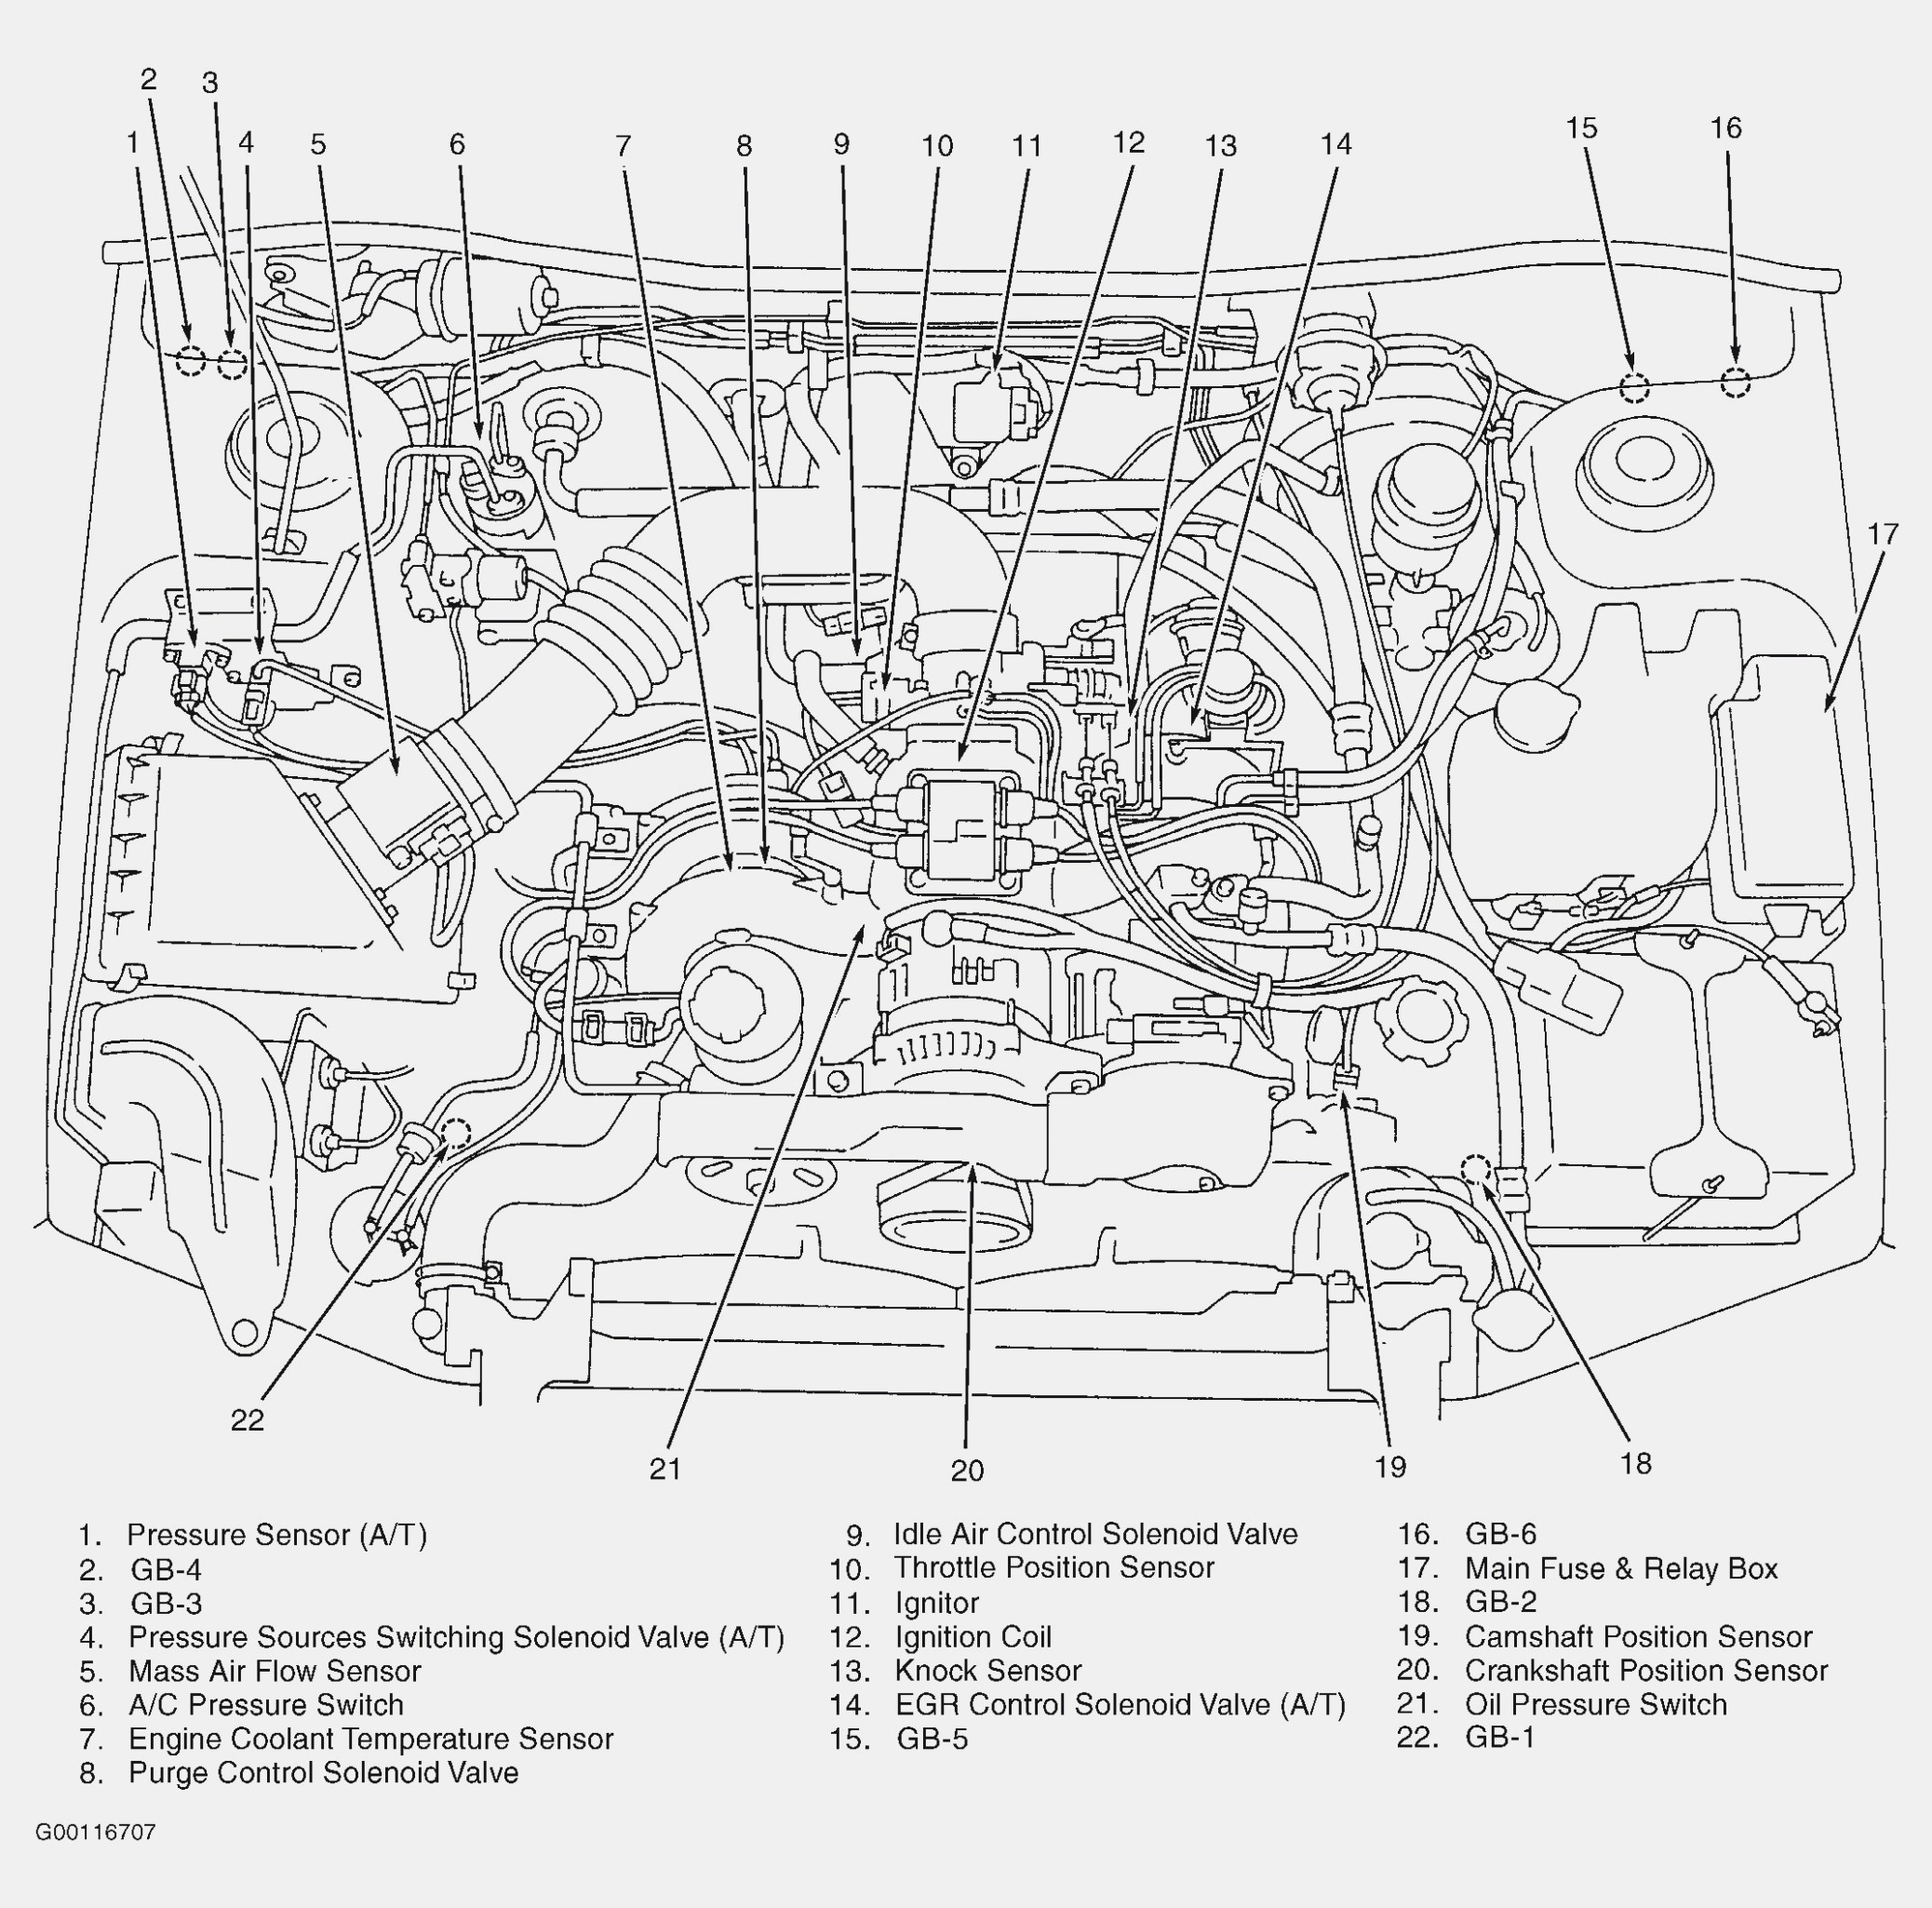 Subaru Radio Wiring Diagram 2012 Subaru Wiring Diagram Wiring Diagram toolbox Of Subaru Radio Wiring Diagram